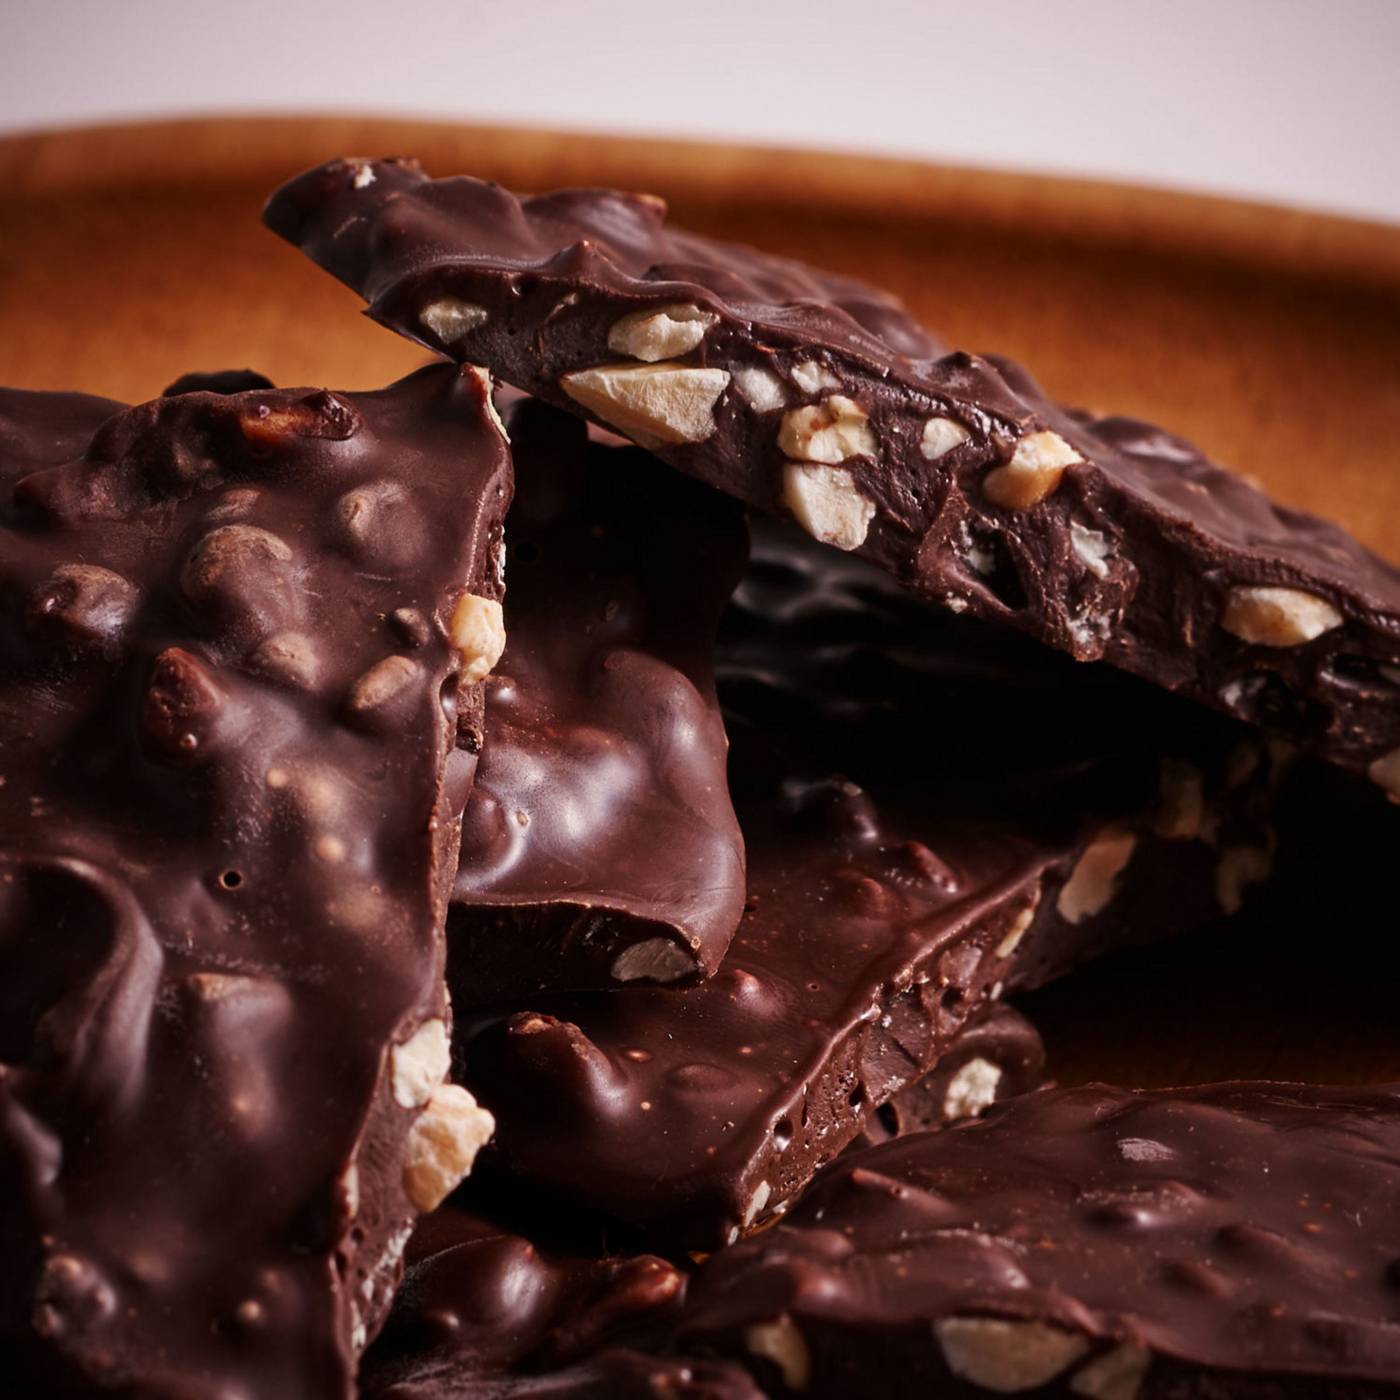 Barkthins Dark Chocolate Almond & Sea Salt Snacking Chocolate Bag; image 2 of 7